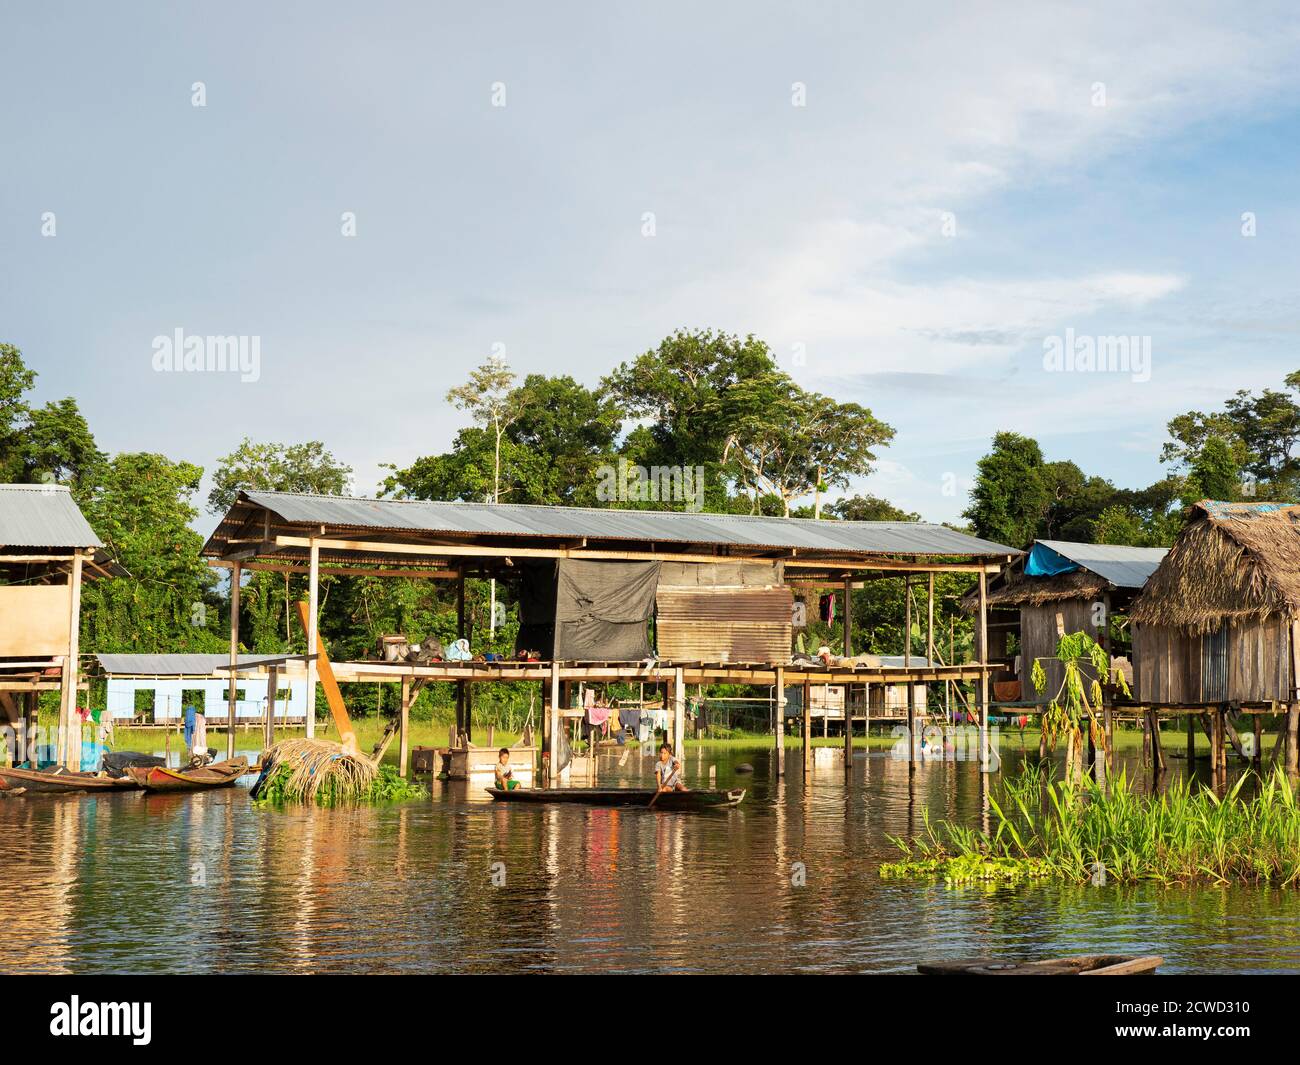 A small fishing community on Río El Dorado, Amazon Basin, Loreto, Peru. Stock Photo